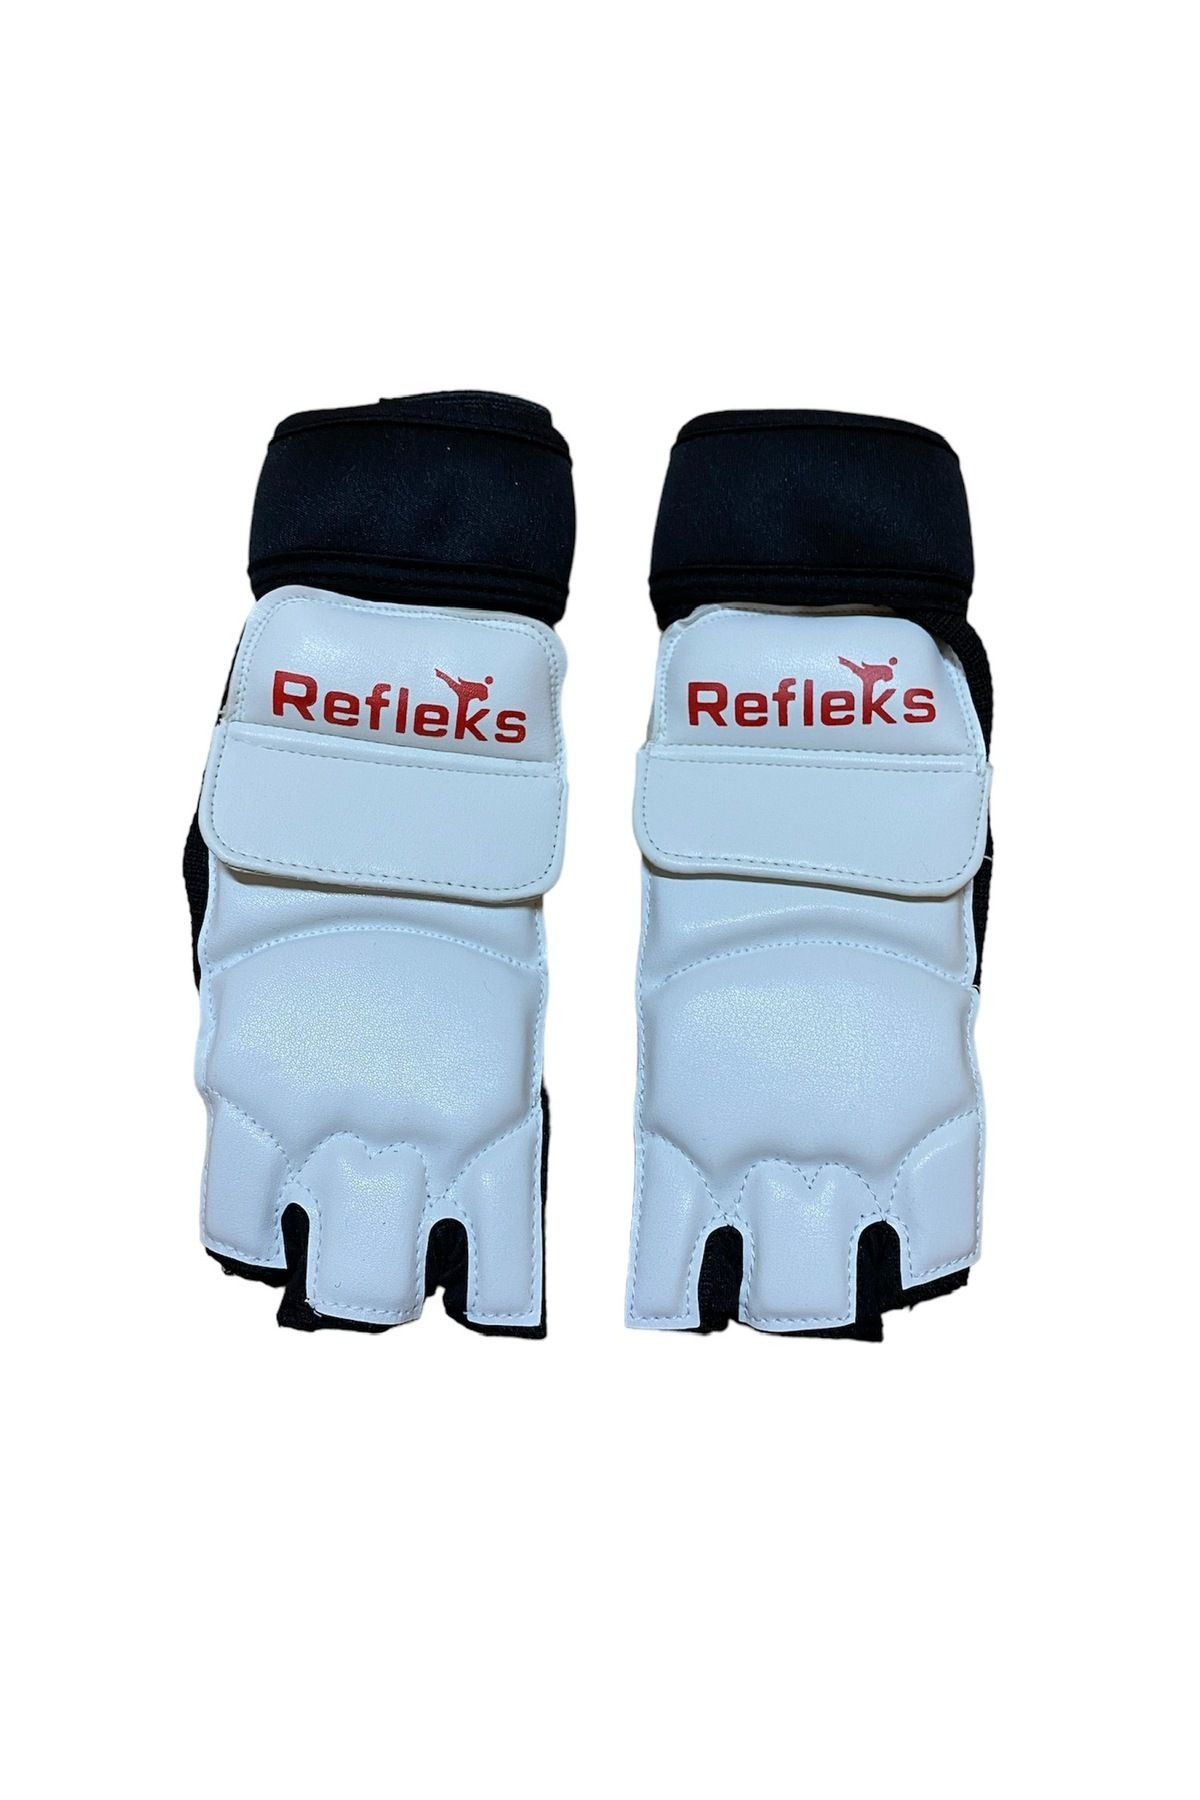 REFLEKS SPOR Taekwondo 3 Parmak Ayaküstü Koruyucu & Tekvando Ayak Koruyucu & Taekwondo Ayak Çorabı